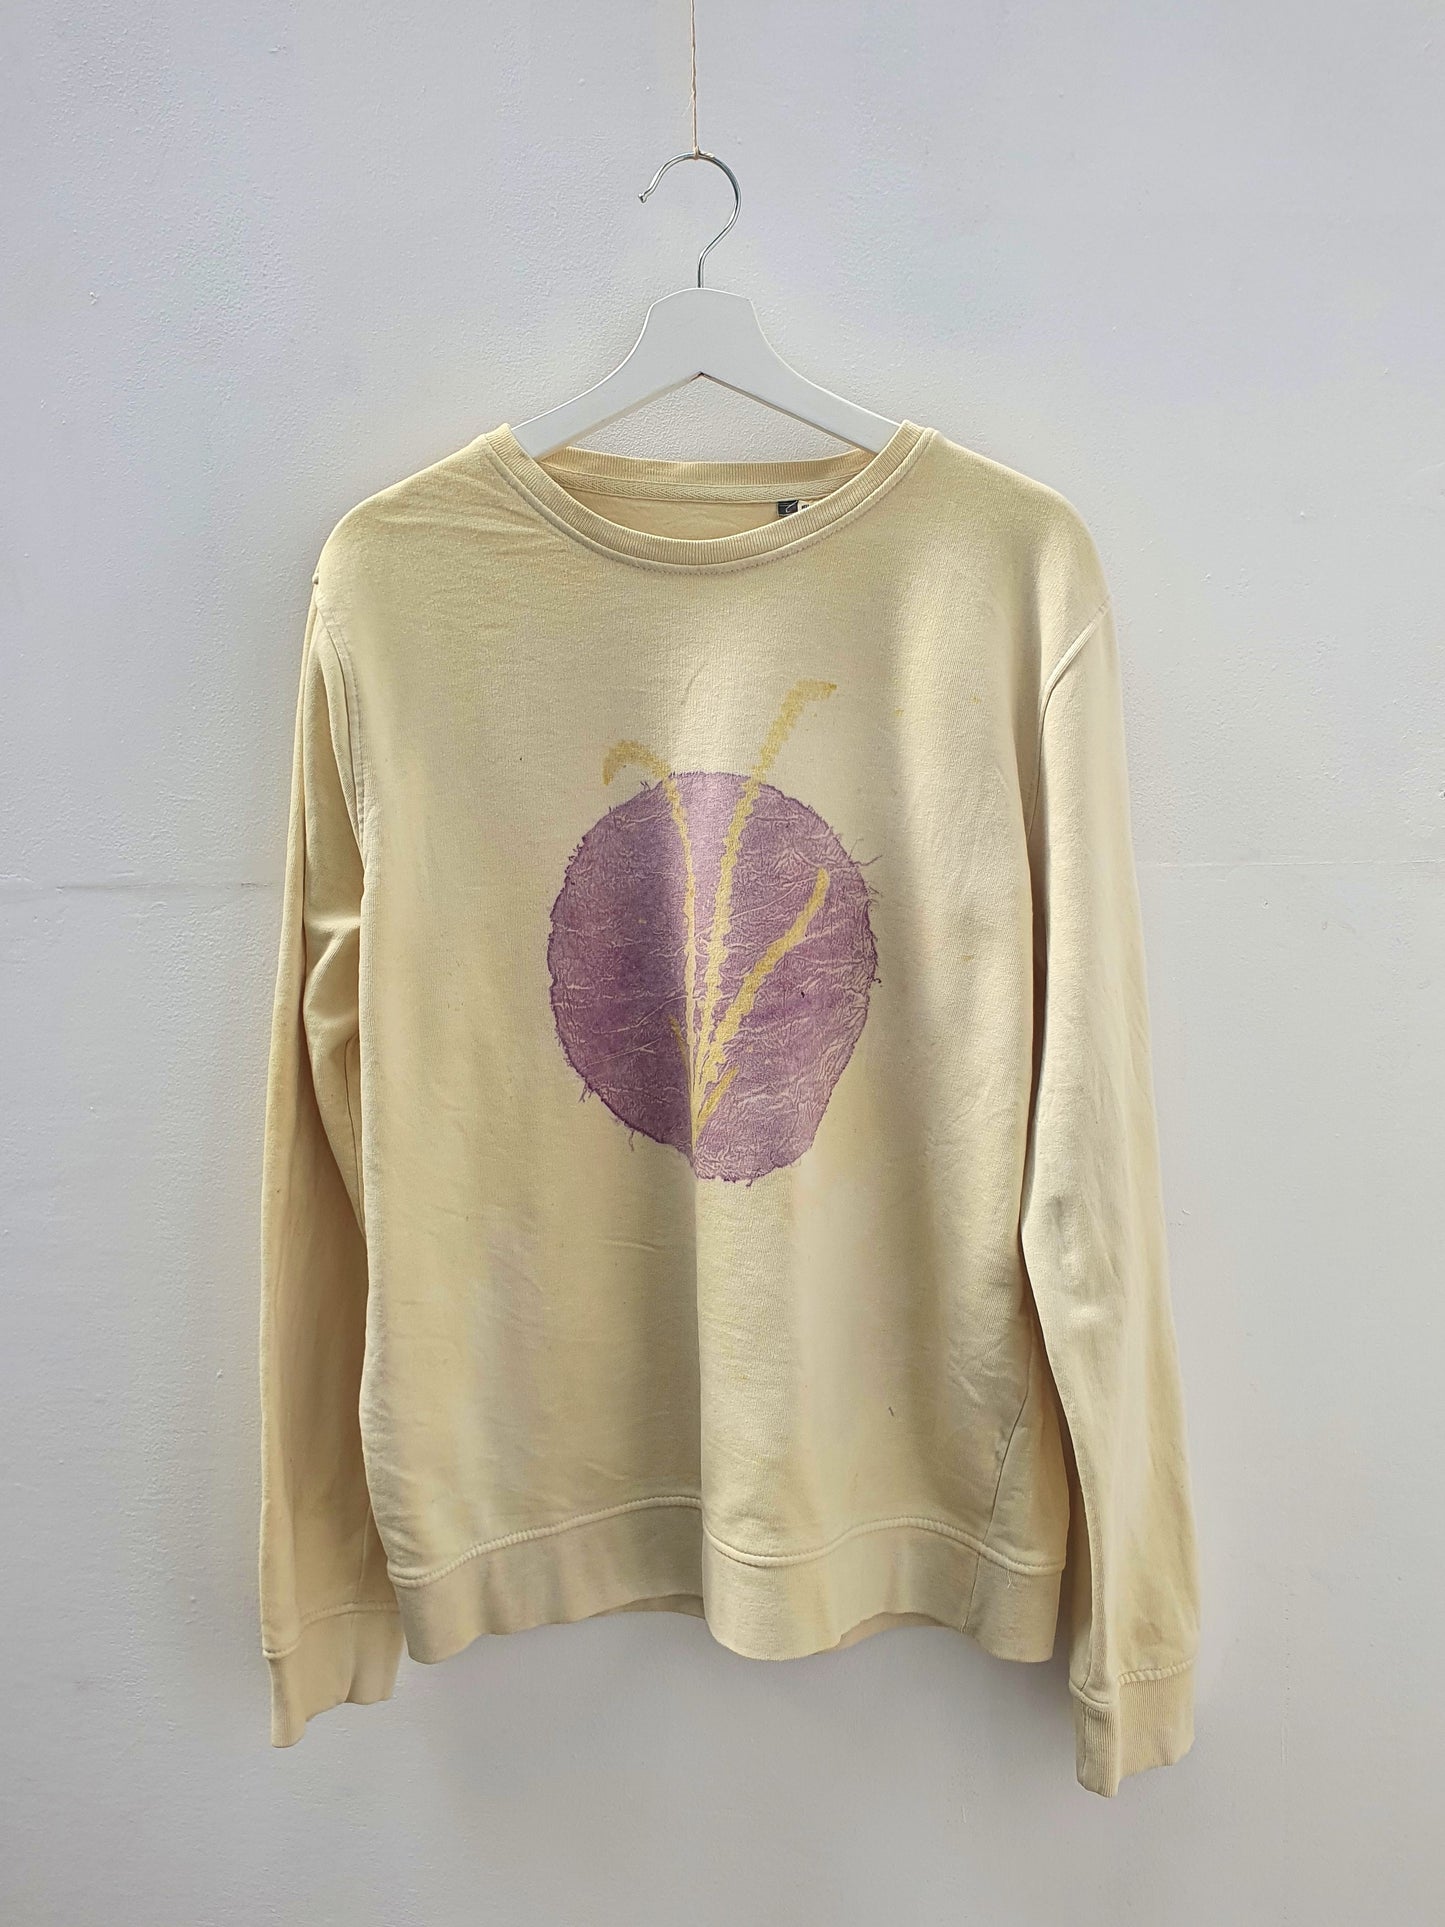 Weld Sphere Organic Cotton Sweatshirt in Lemon